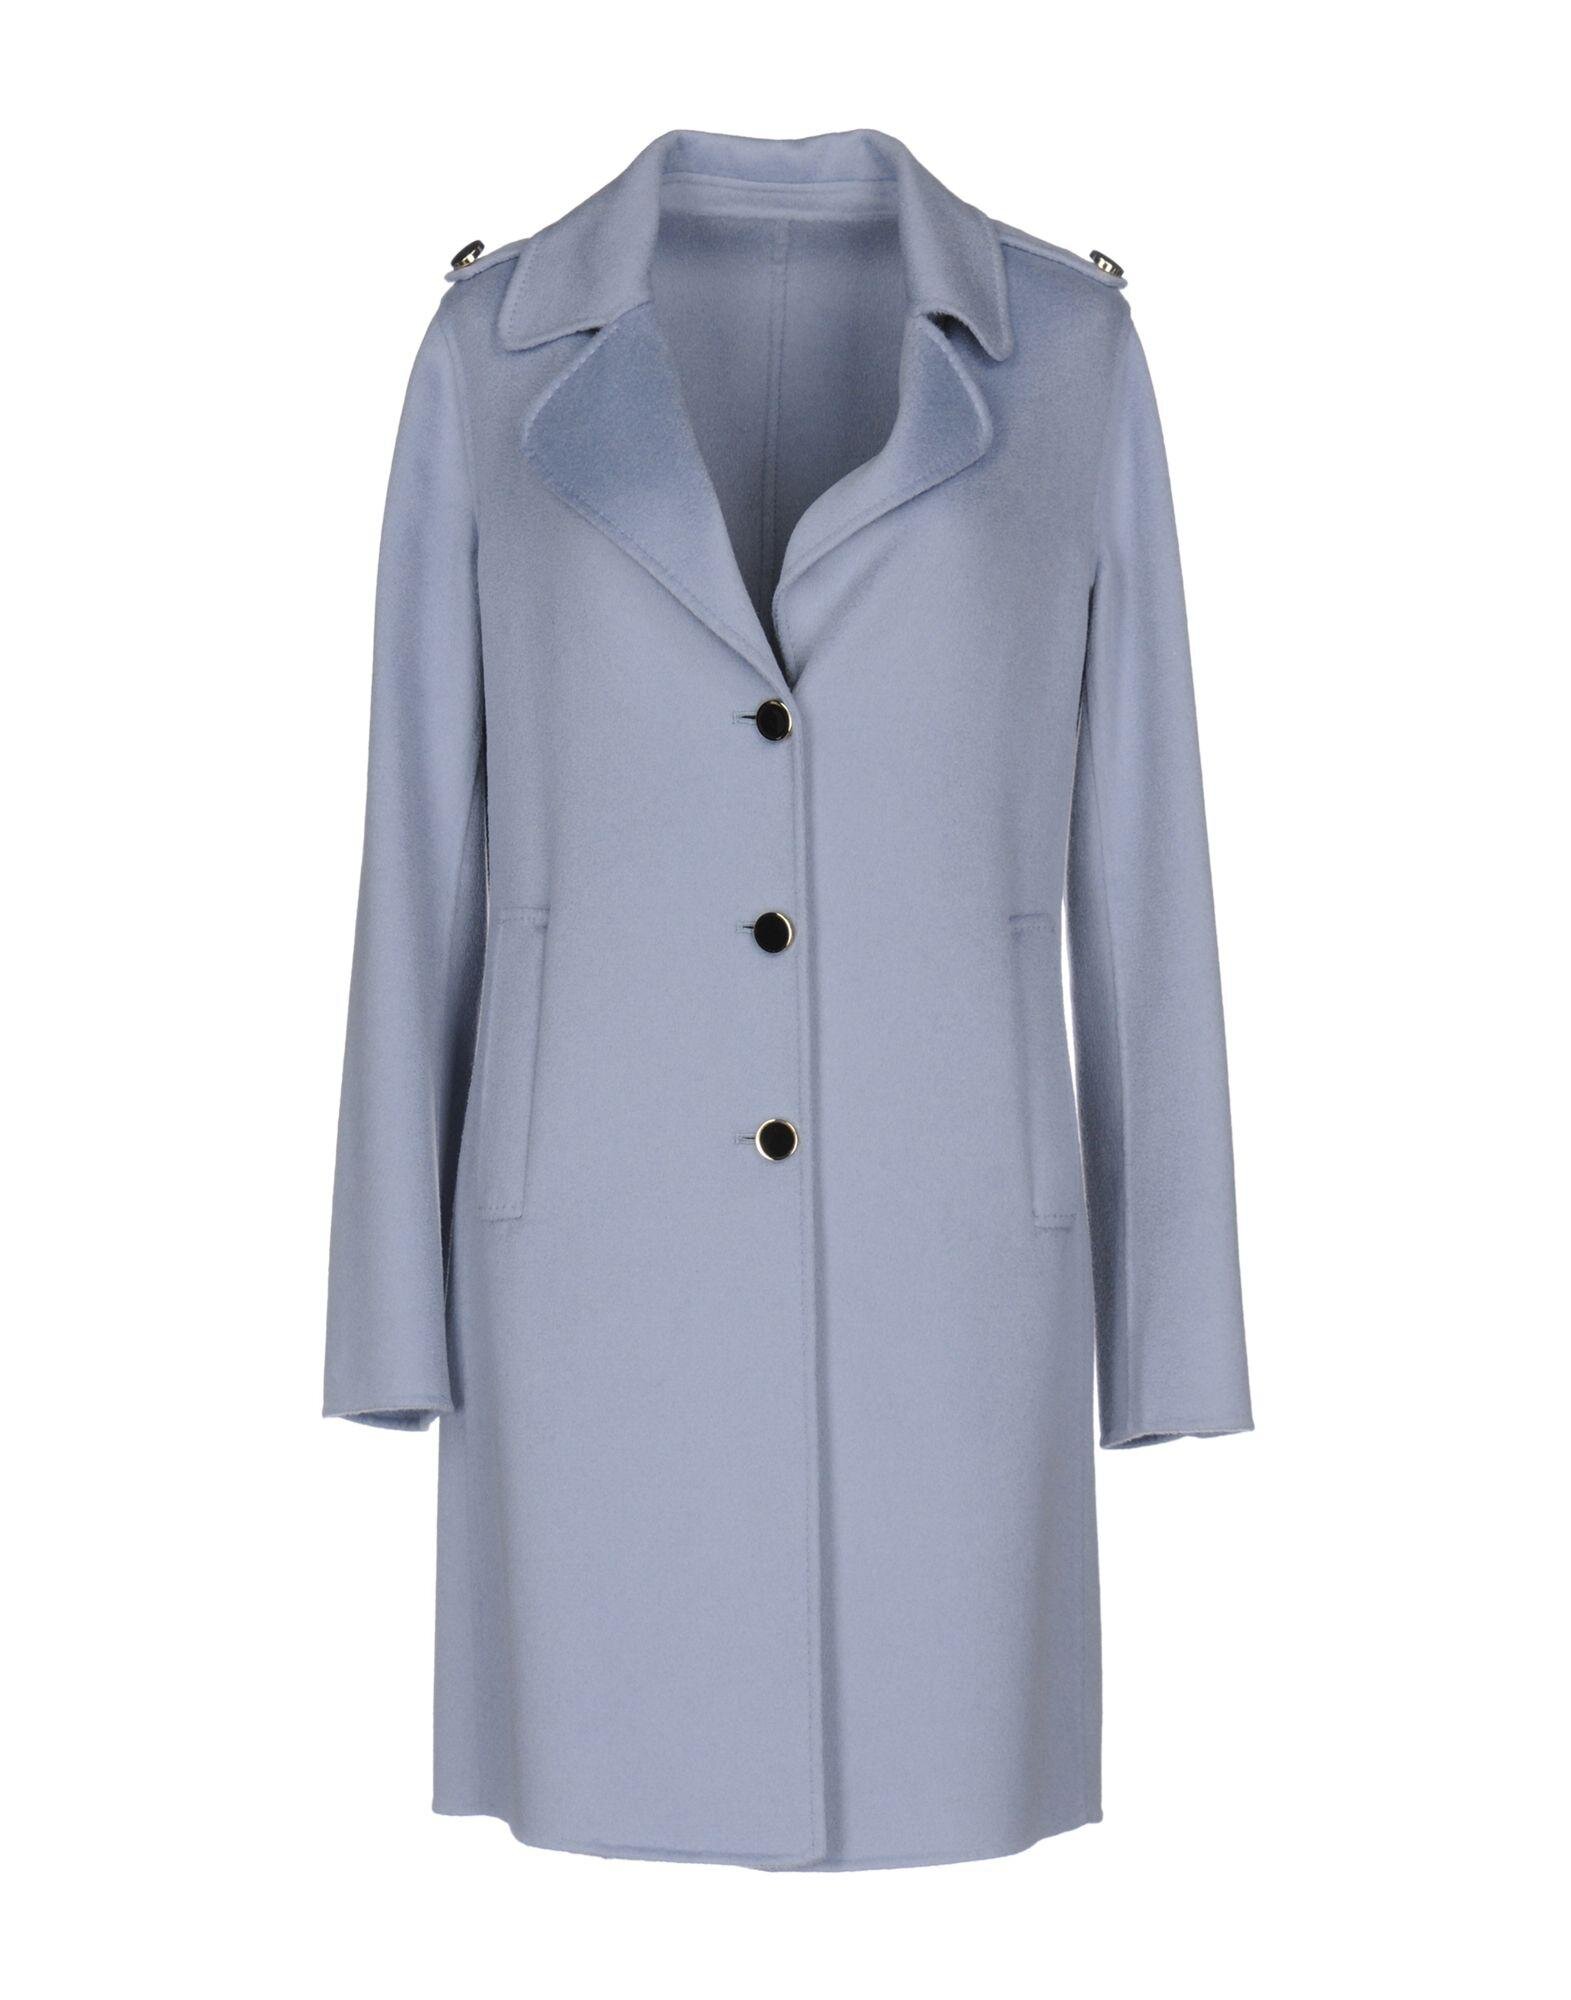 Emporio Armani Single-Breasted Cashmere Coat in Sky Blue.jpg